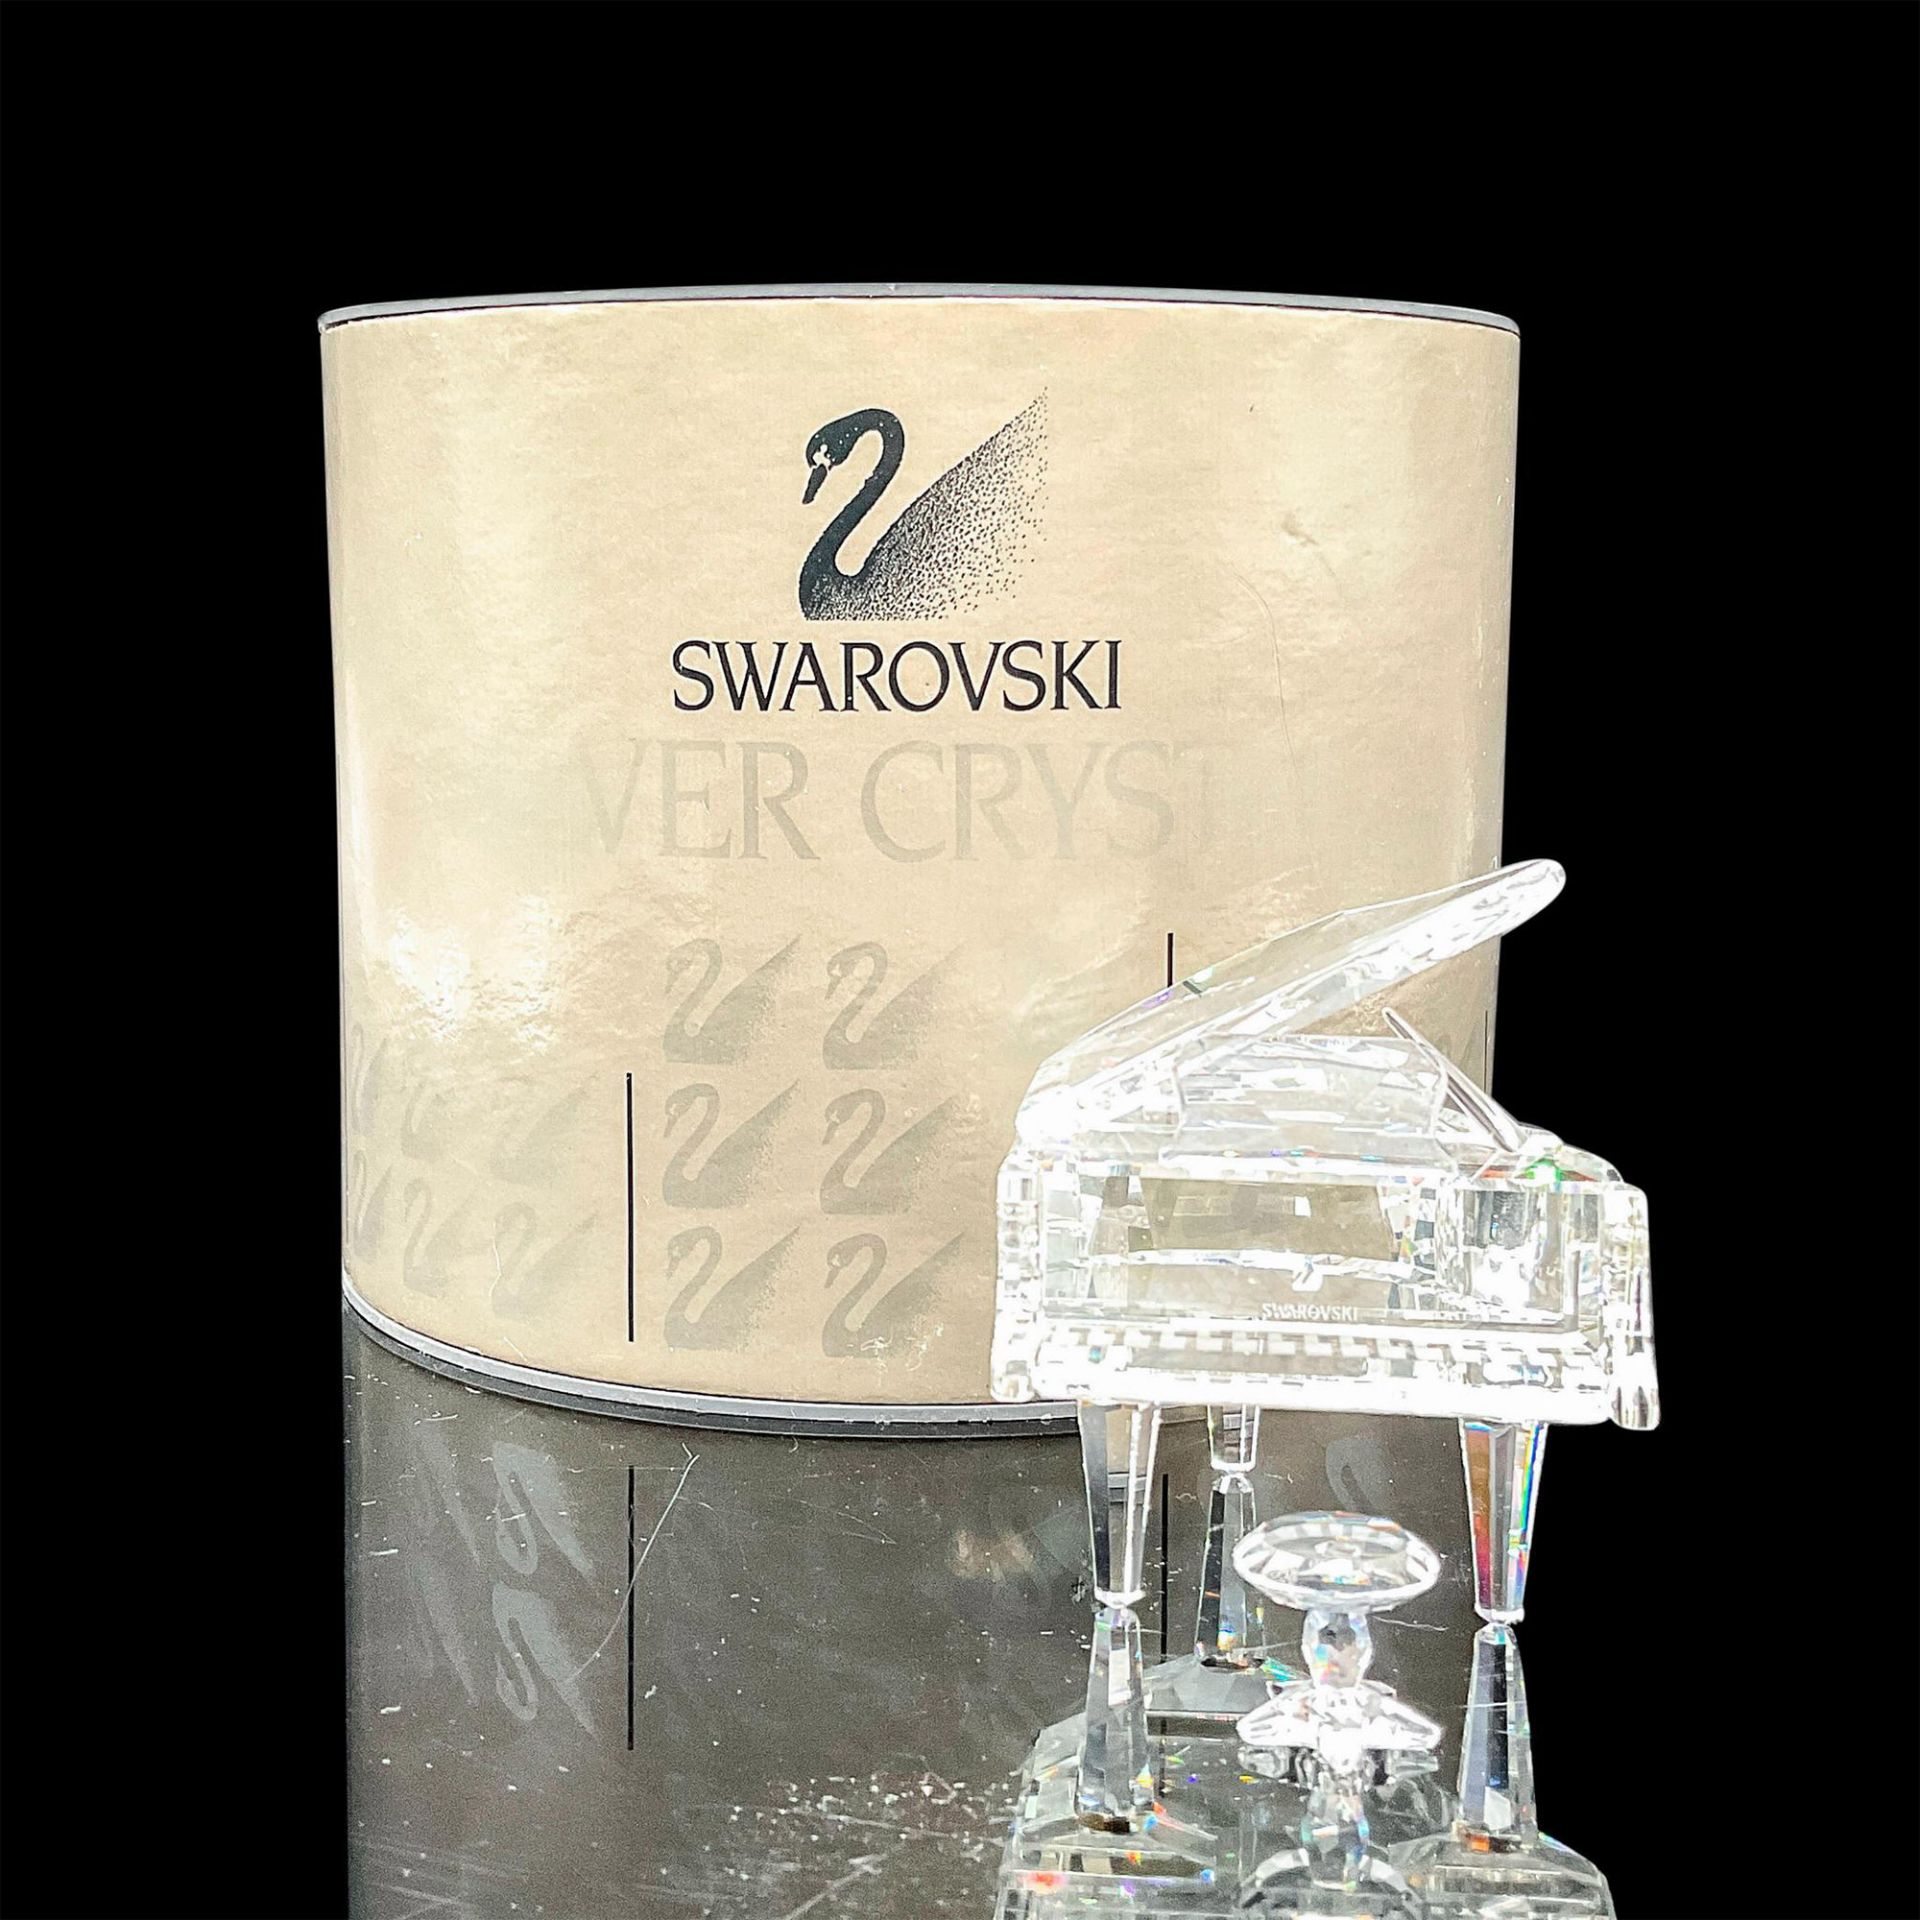 Swarovski Silver Crystal Figurine, Grand Piano with Stool - Image 2 of 4